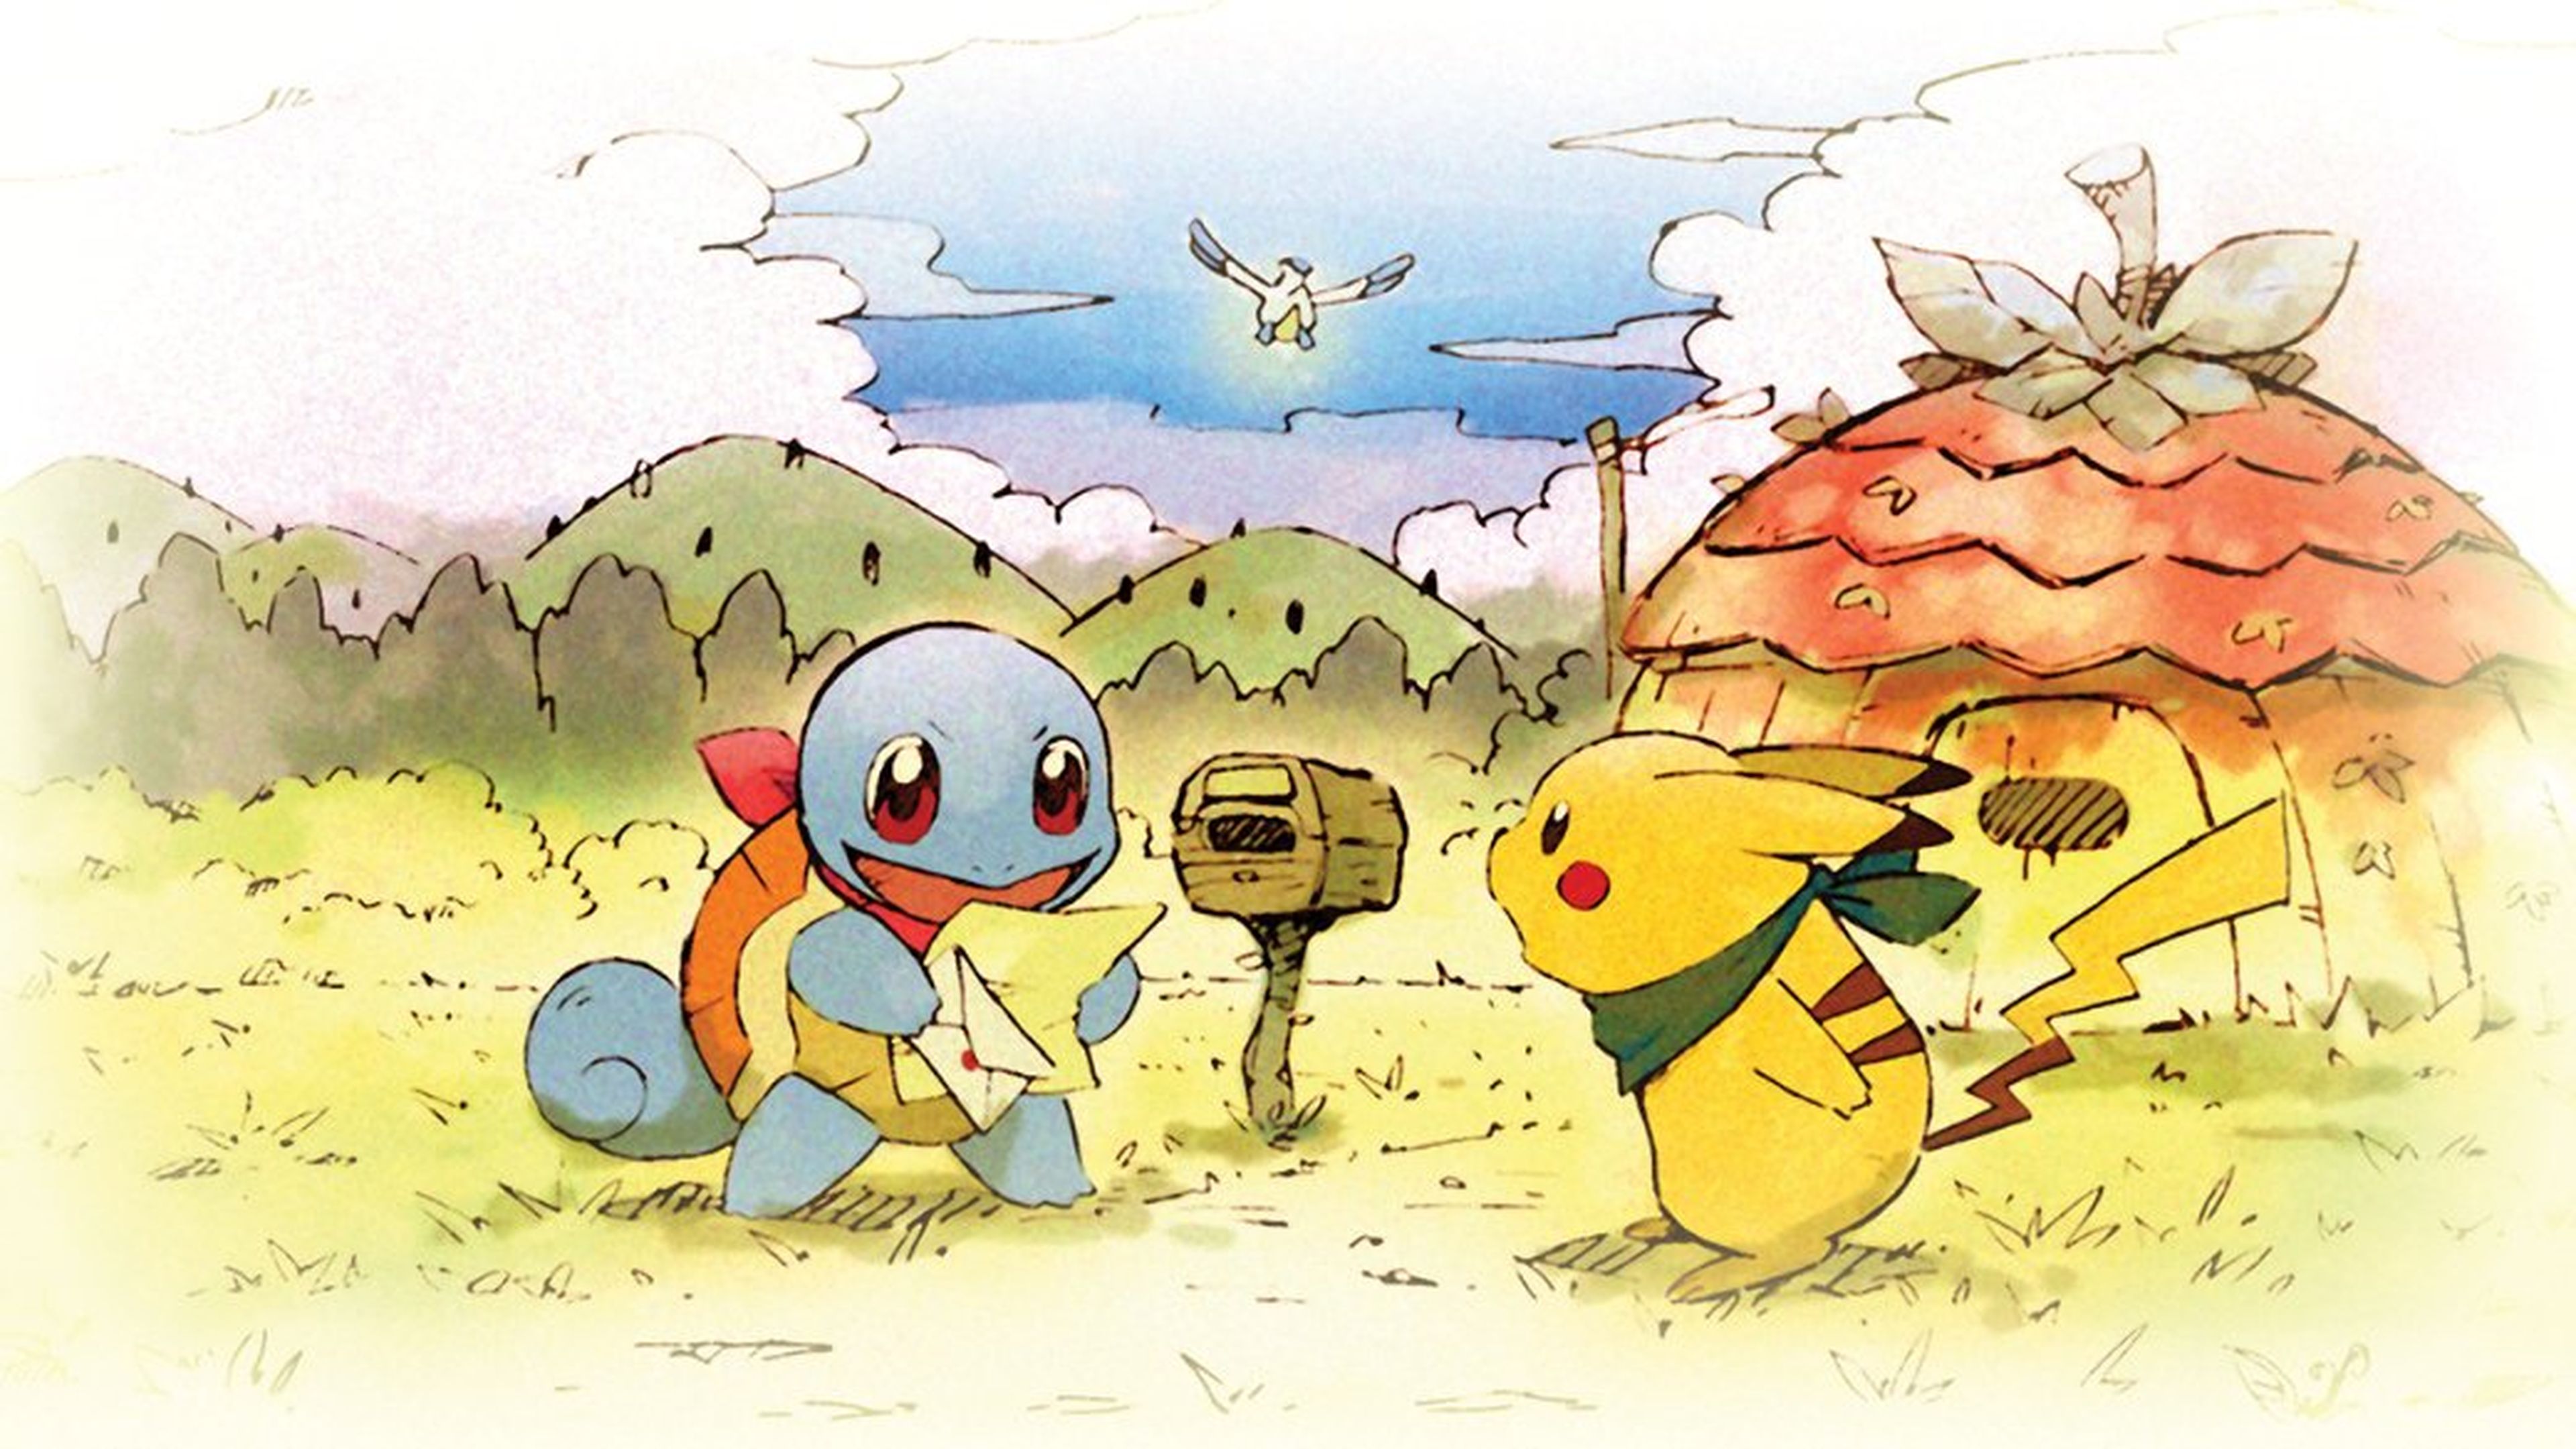 Un set de pegatinas por la reserva de Pokémon Mundo Misterioso